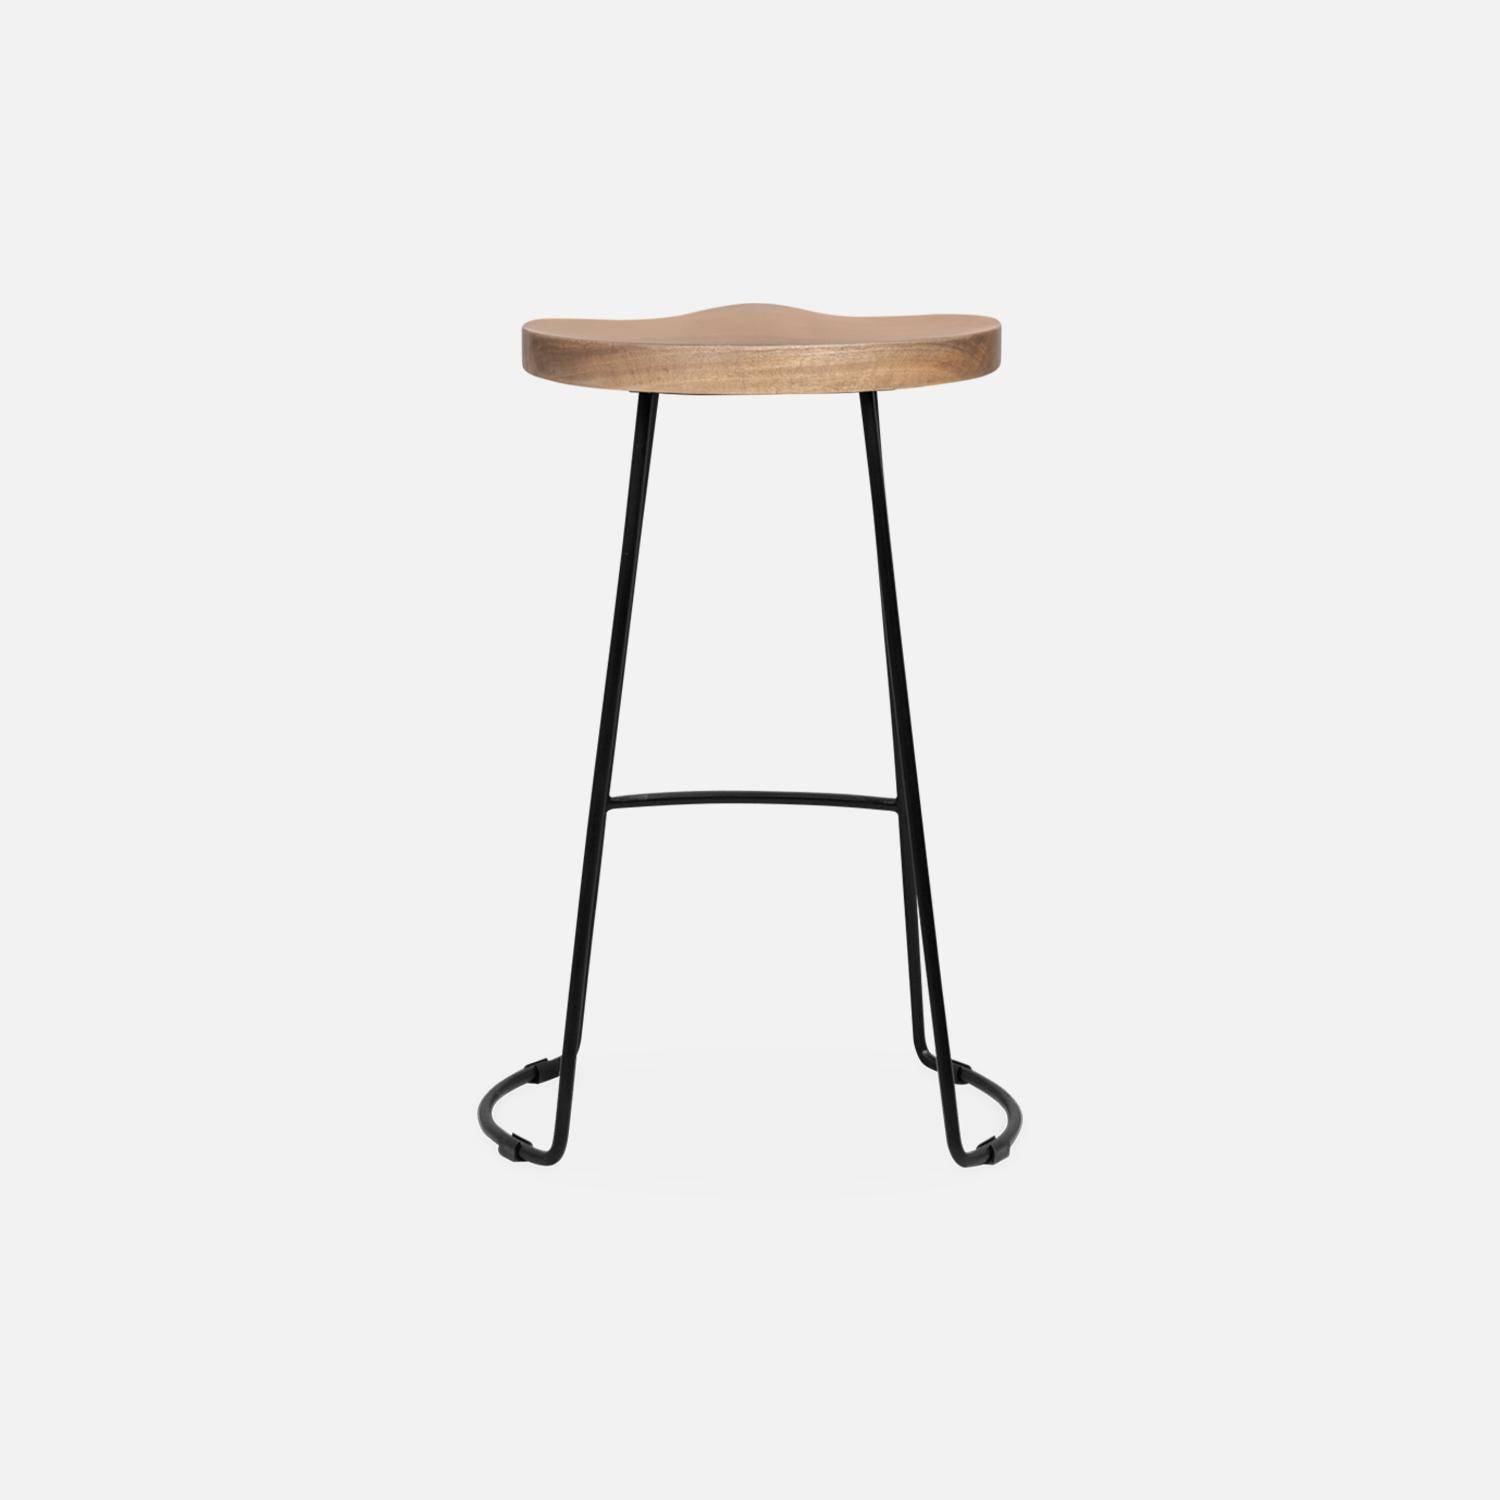 Set of 4 industrial metal and wooden bar stools, 44x36x65cm, Jaya, Mango wood seat, black metal legs,sweeek,Photo6